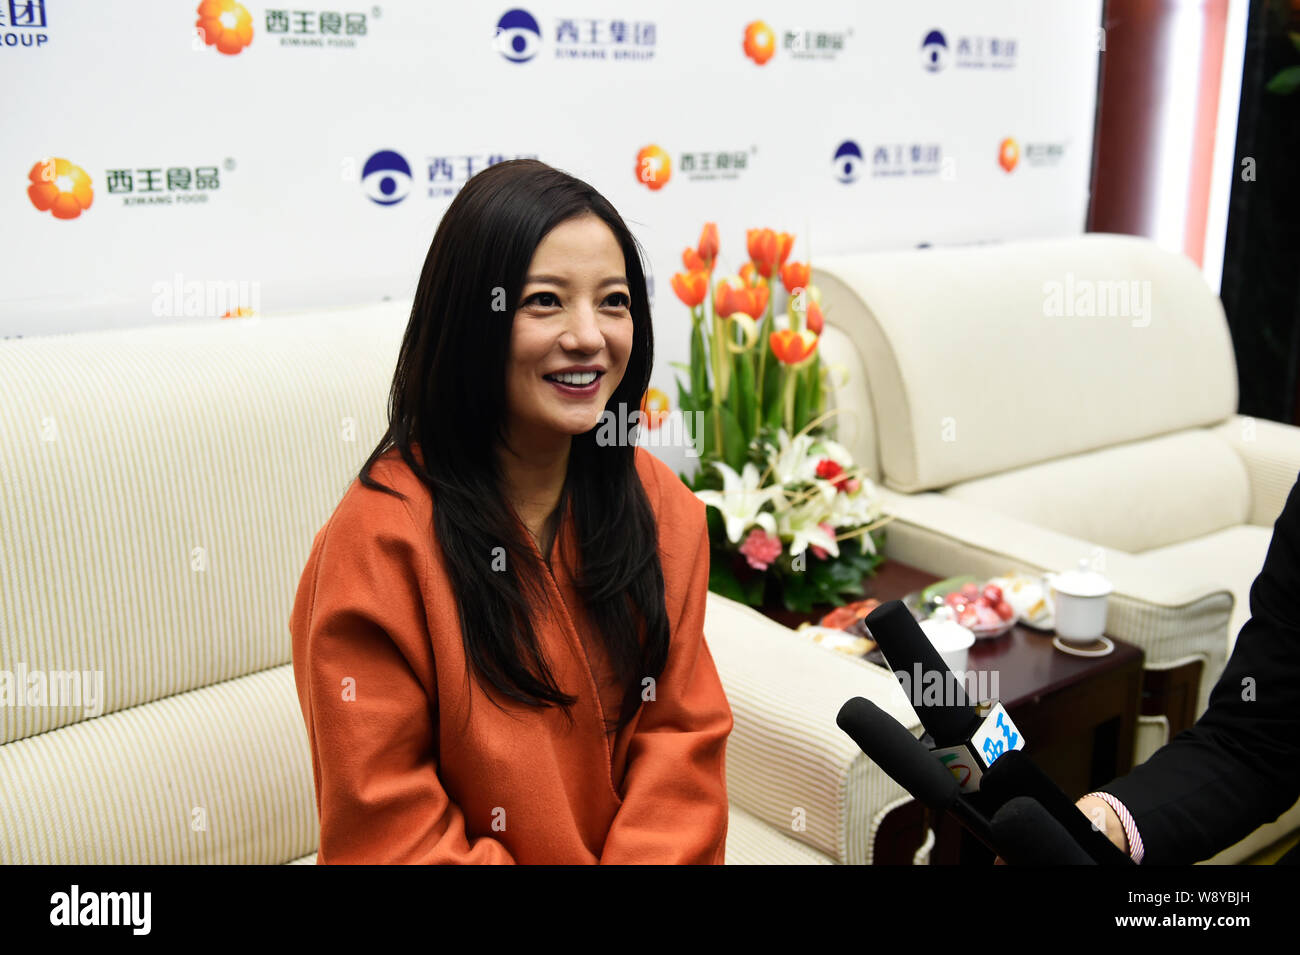 Chinesische Schauspielerin Zhao Wei ist während der Xiwang Gruppe Marke Förderung Konferenz in Zouping county interviewt, East China Provinz Shandong, 18 Decemb Stockfoto